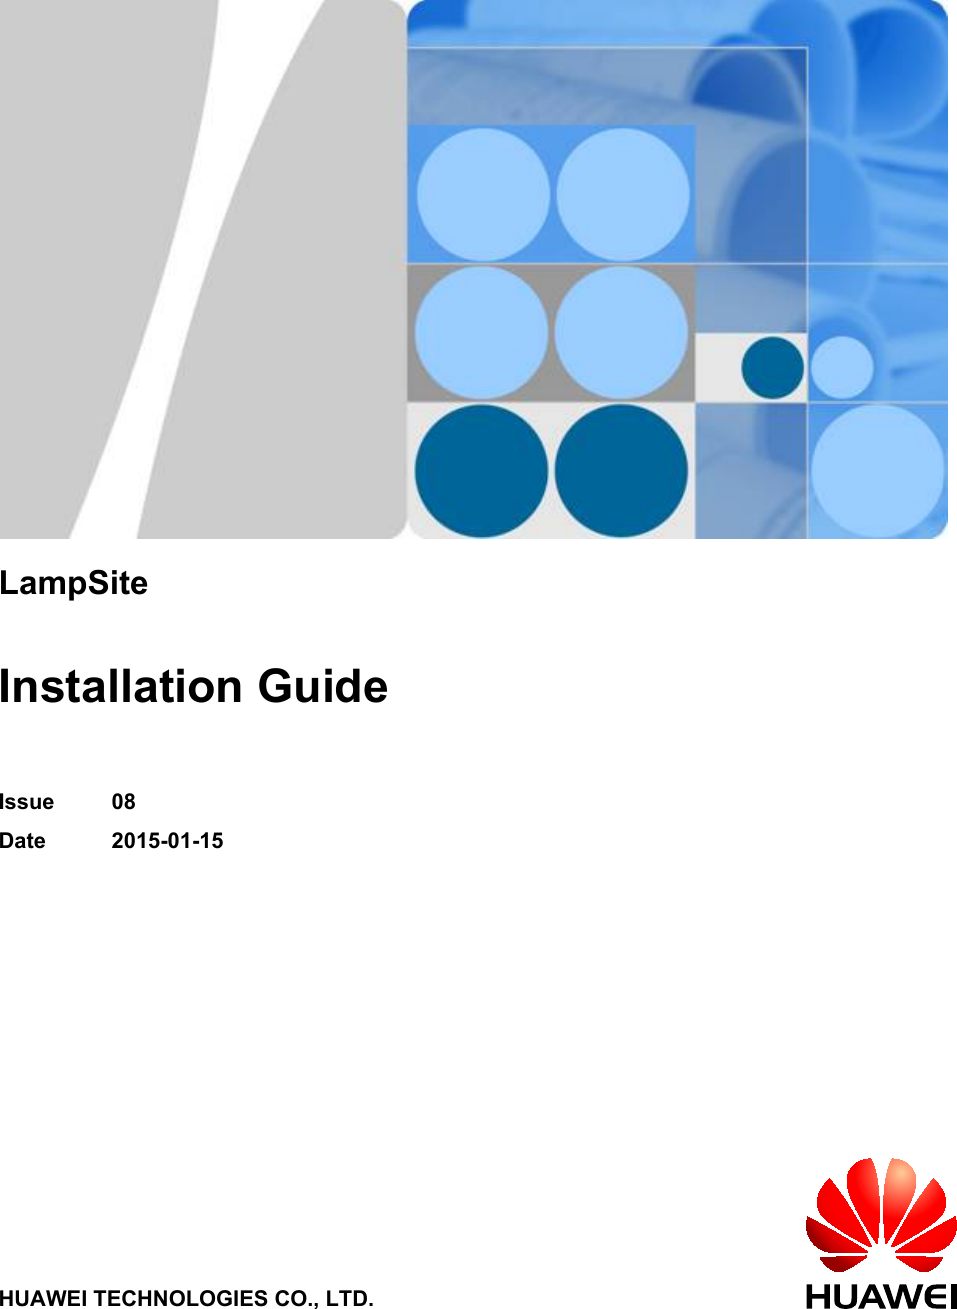 LampSiteInstallation GuideIssue 08Date 2015-01-15HUAWEI TECHNOLOGIES CO., LTD.